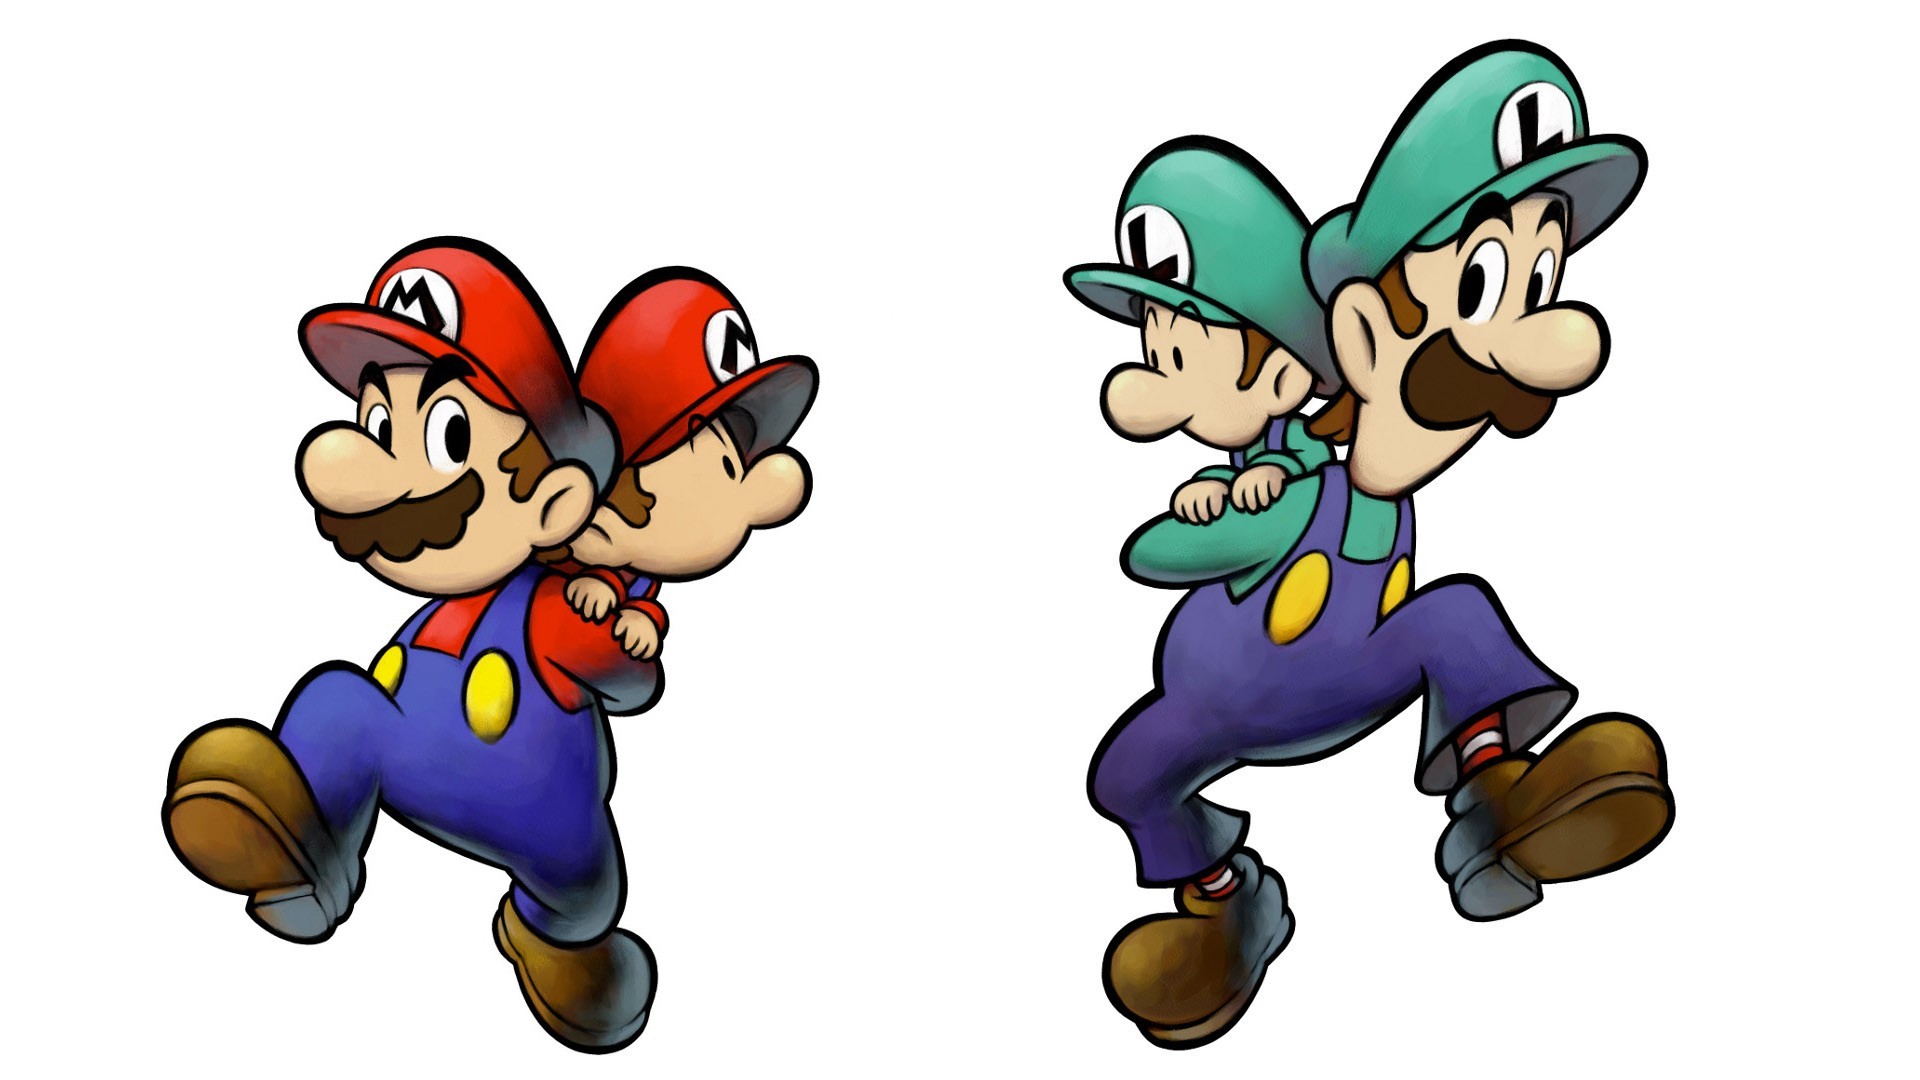 1920x1080 ... Mario & Luigi: Partners in Time - Fanart - Background ...